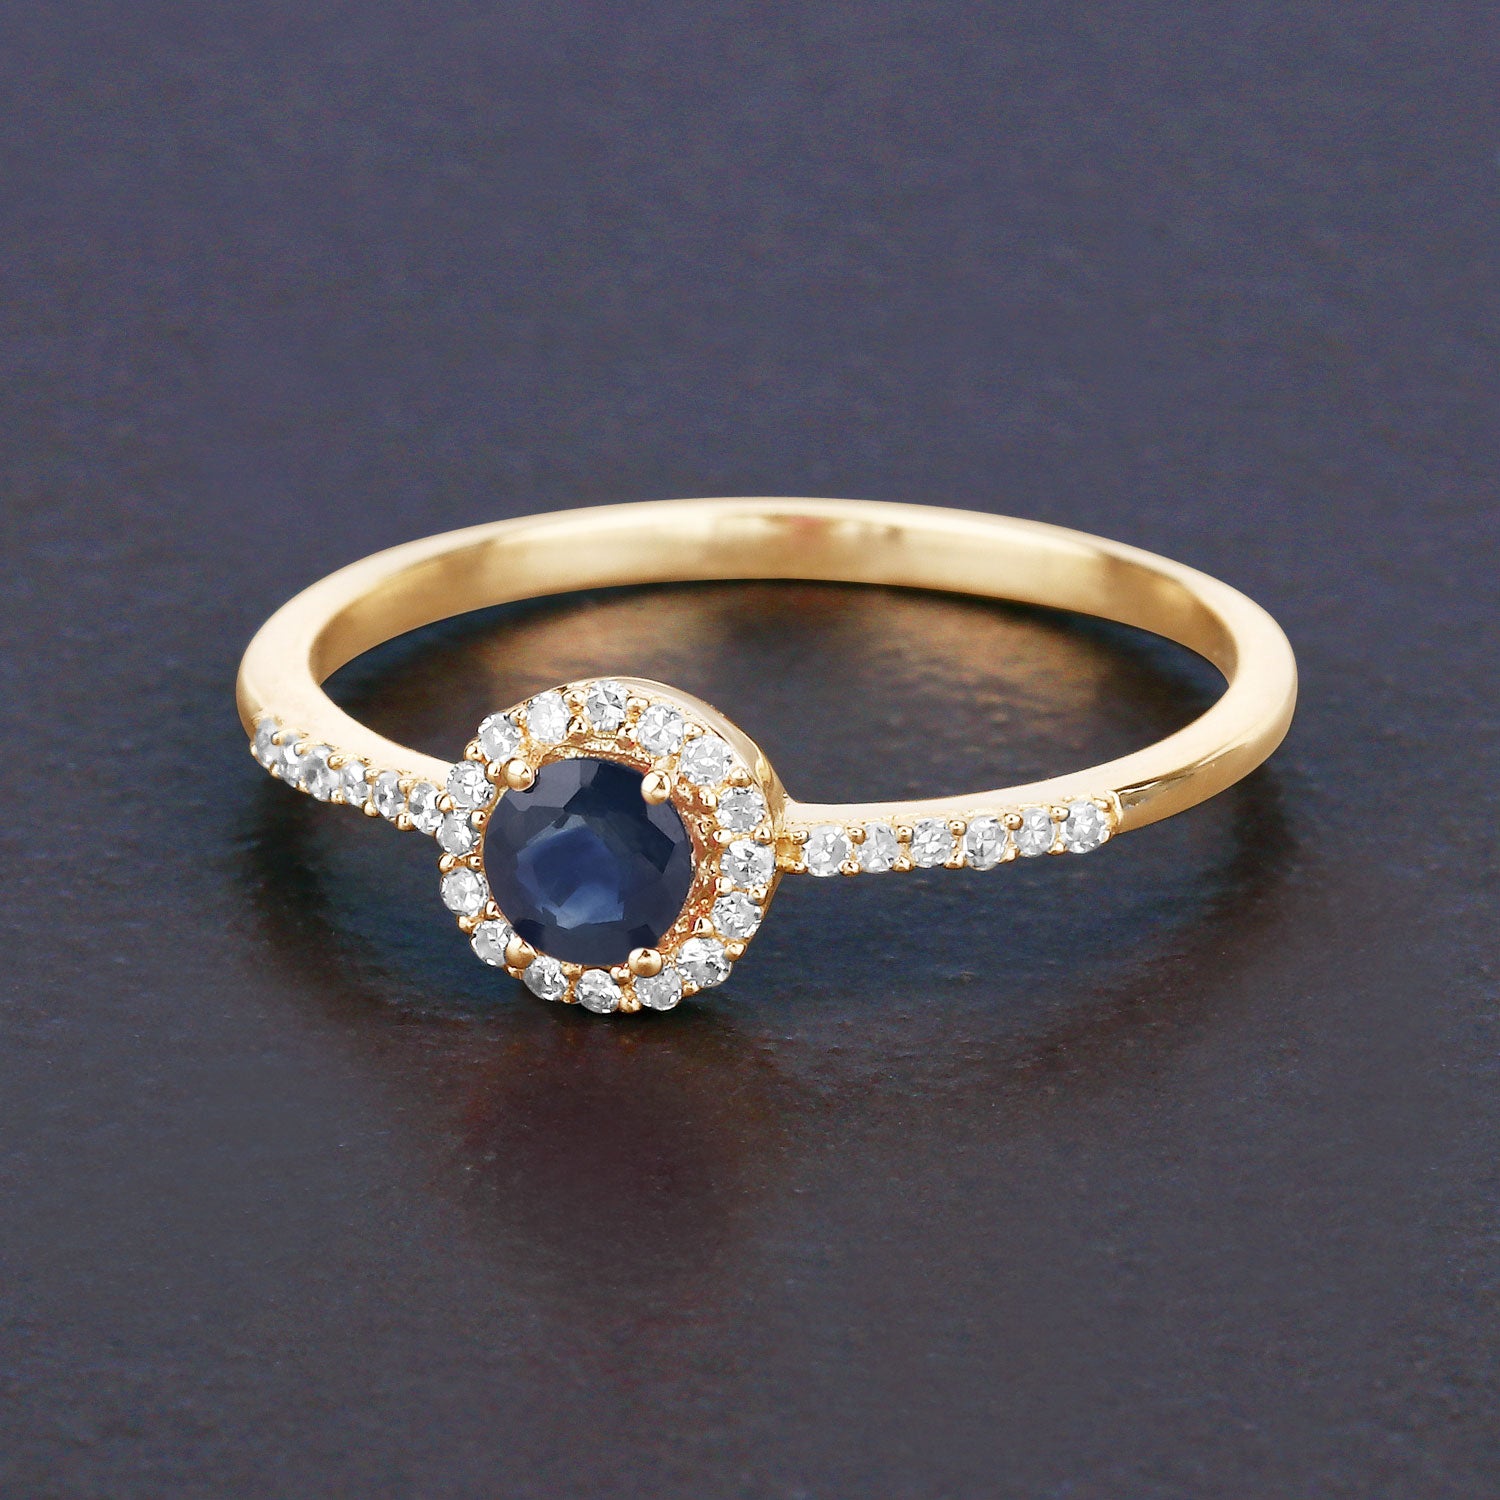 0.38 Carat Genuine Blue Sapphire and White Diamond 14K Yellow Gold Ring